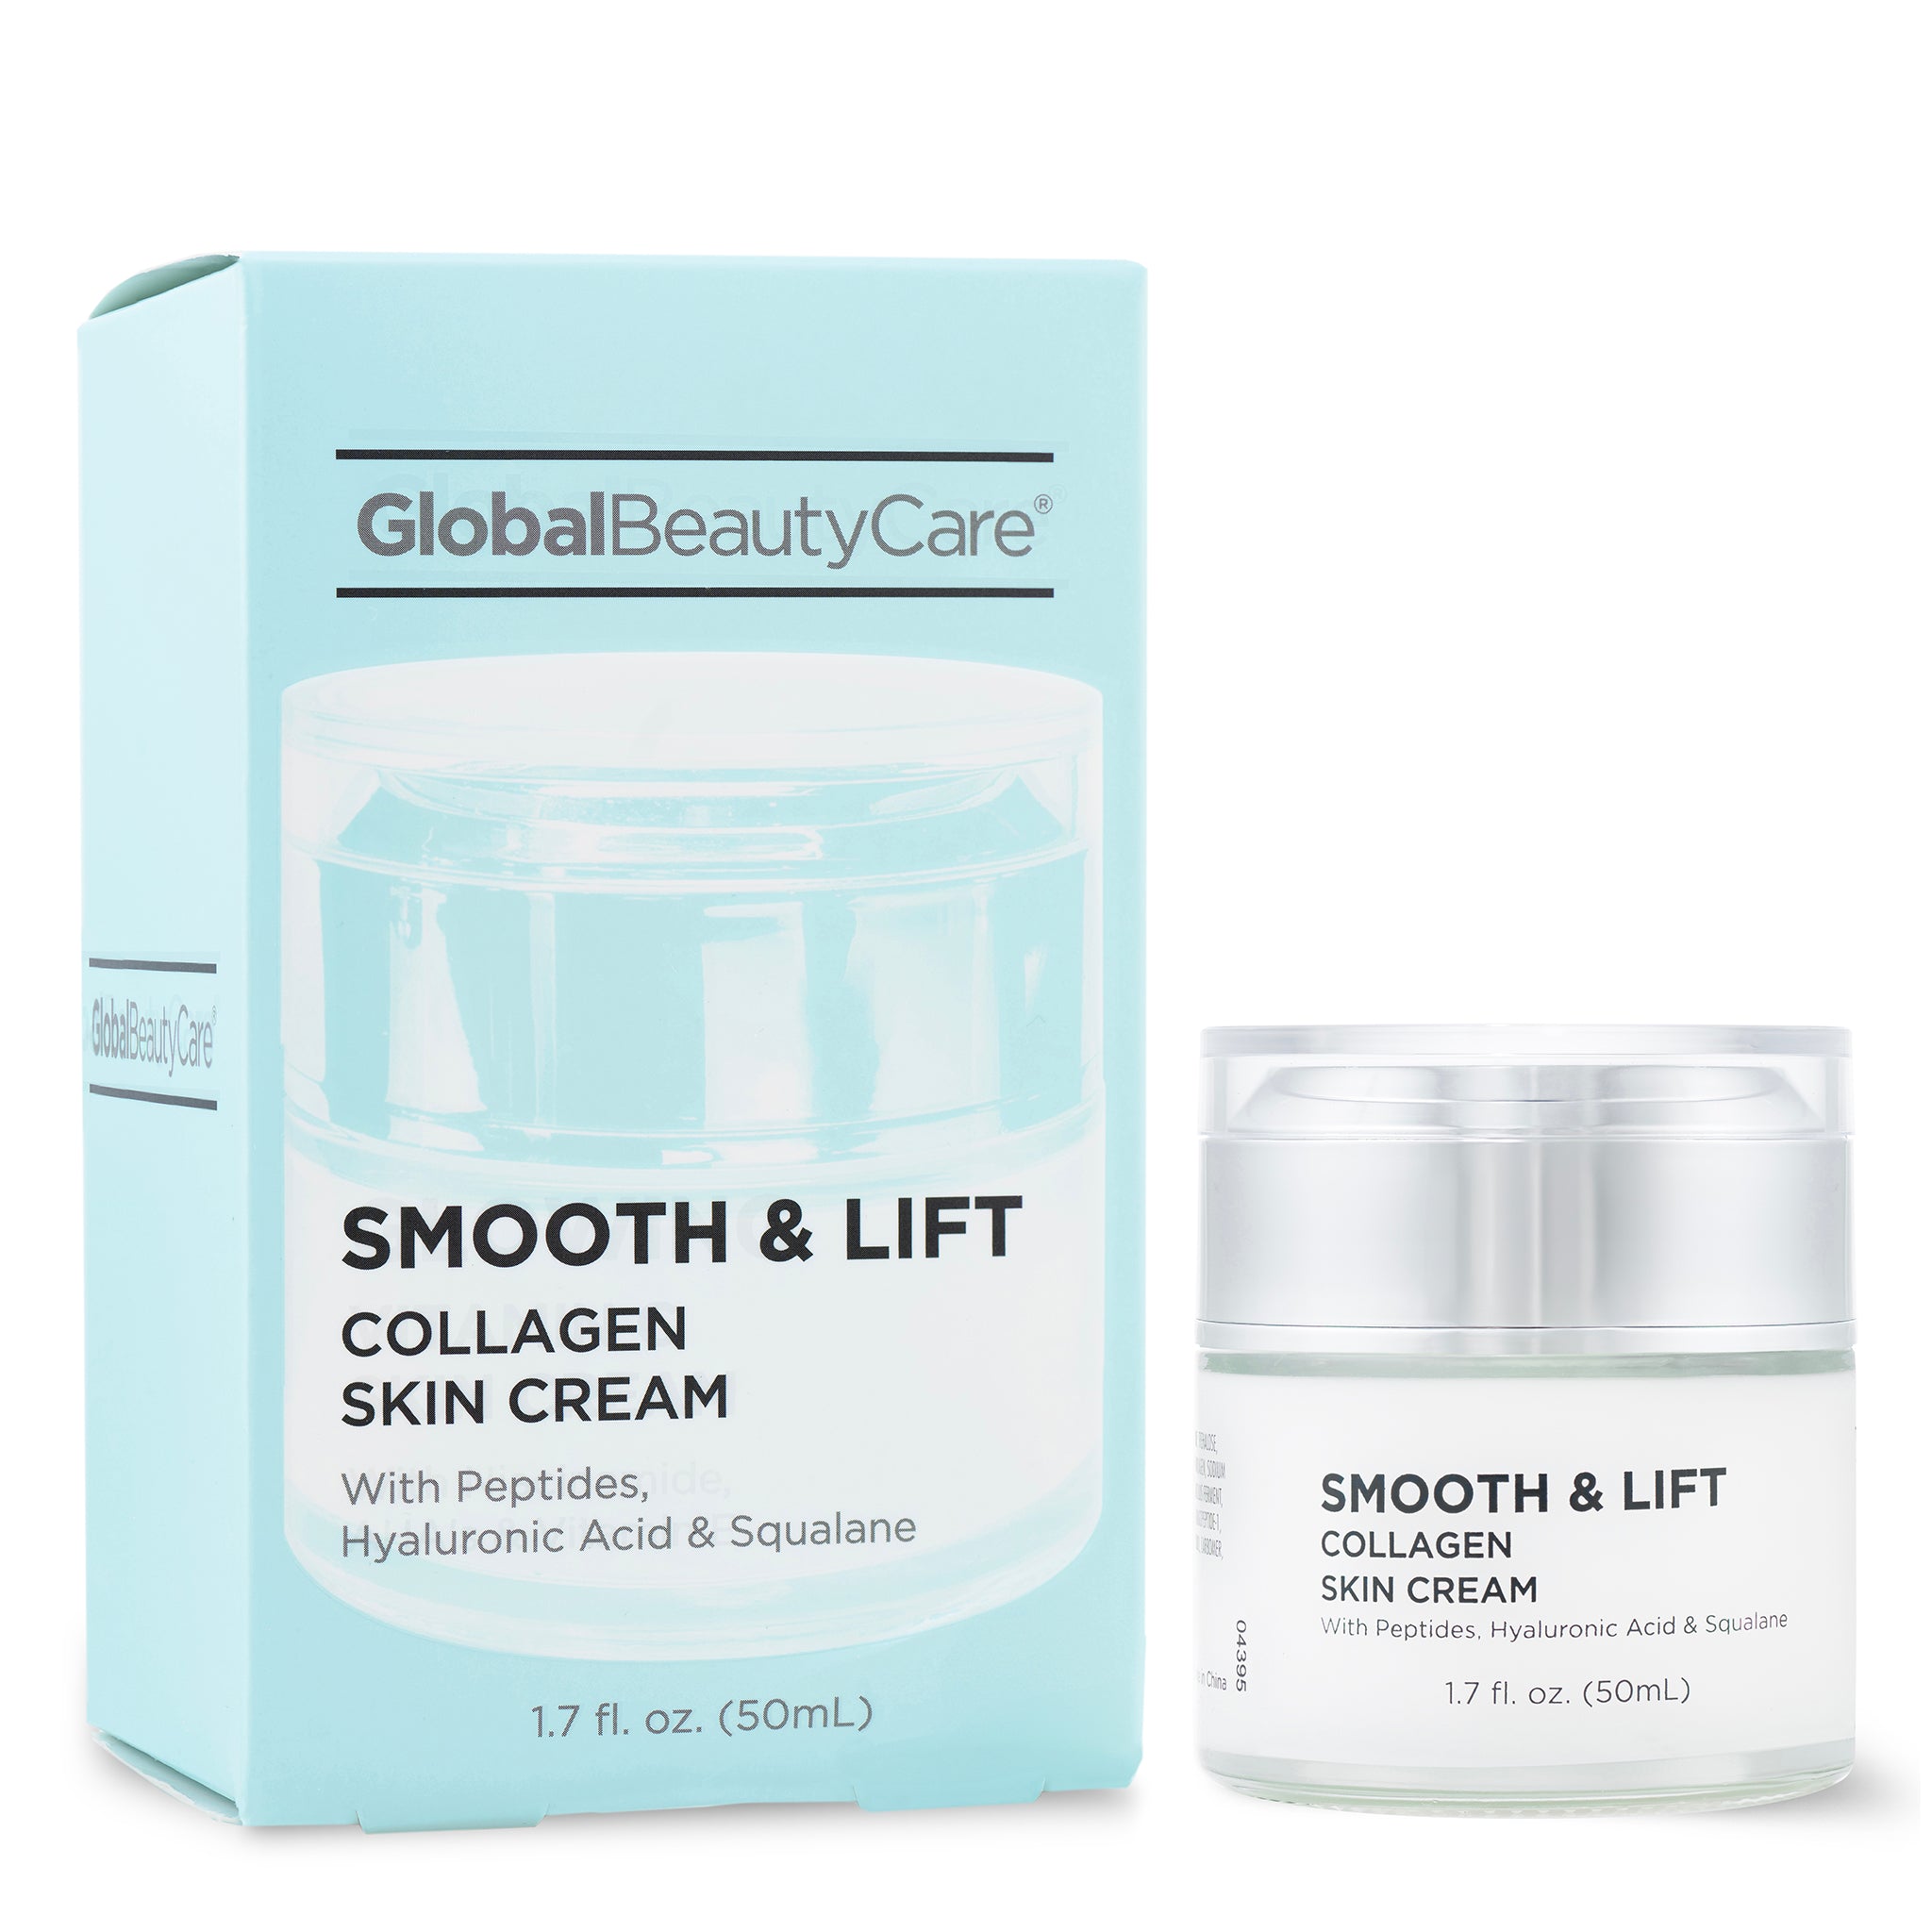 Smooth & Lift Premium Collagen Skin Cream